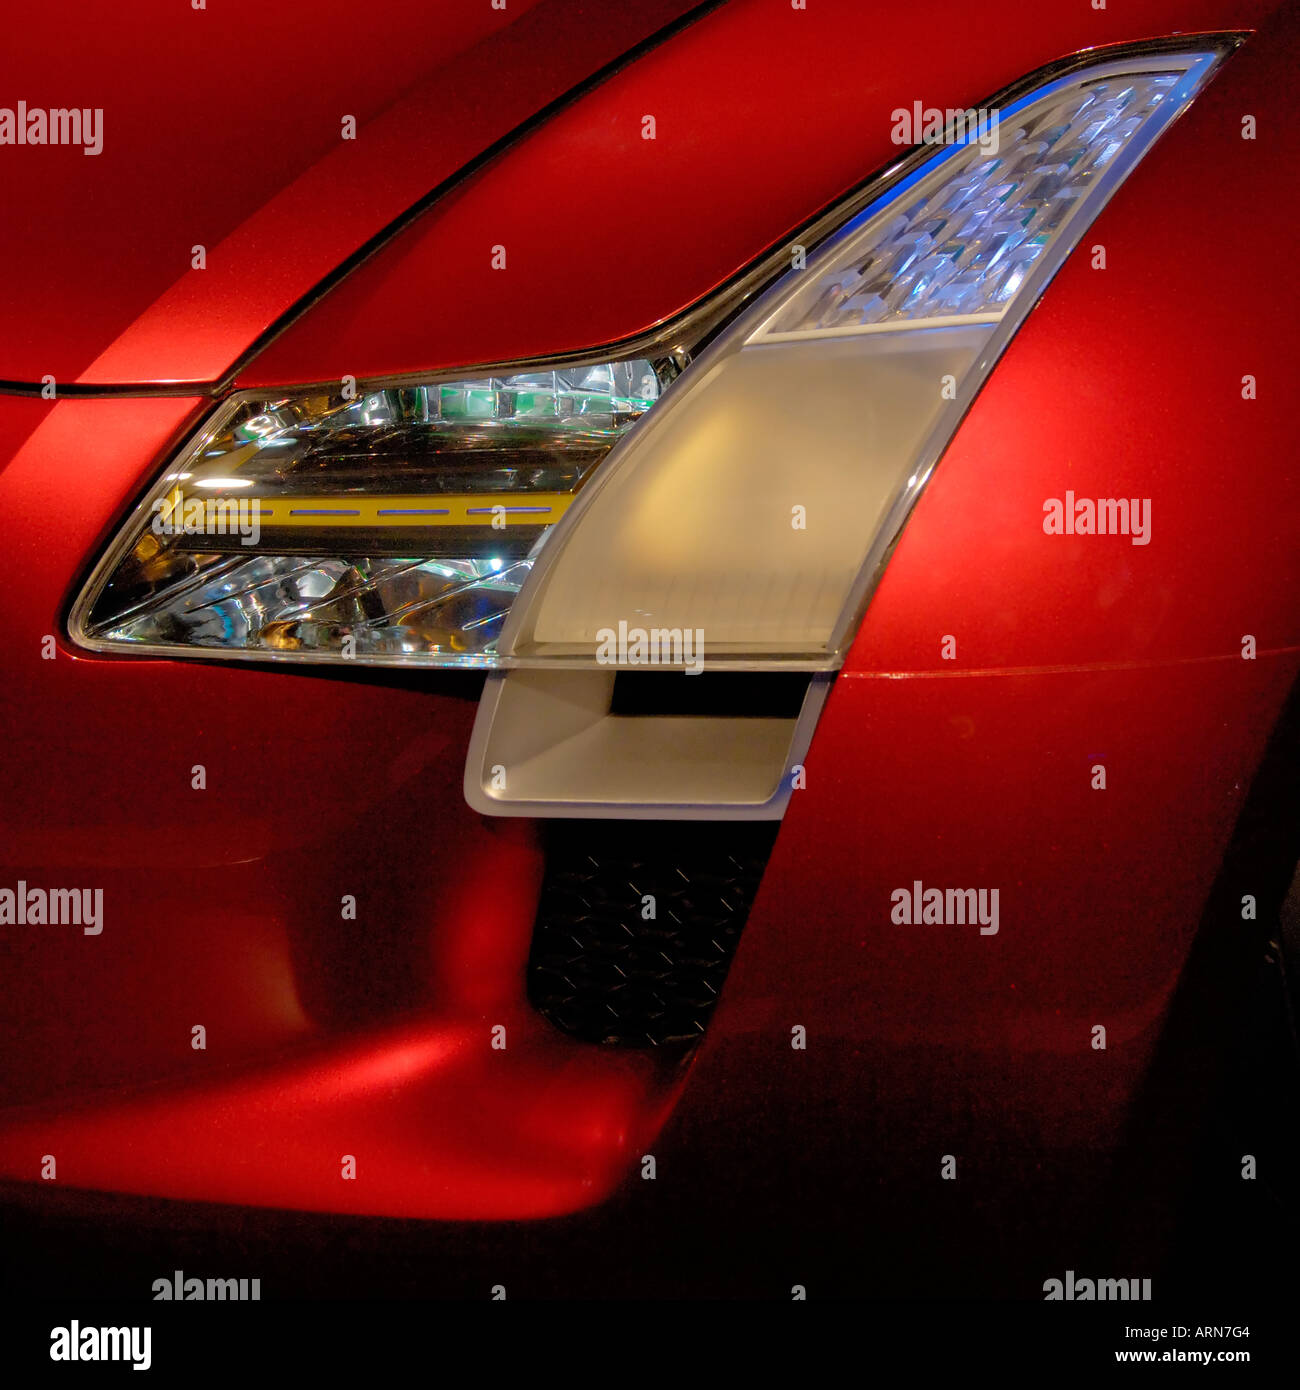 Mazda Concept car headlight detail Stock Photo